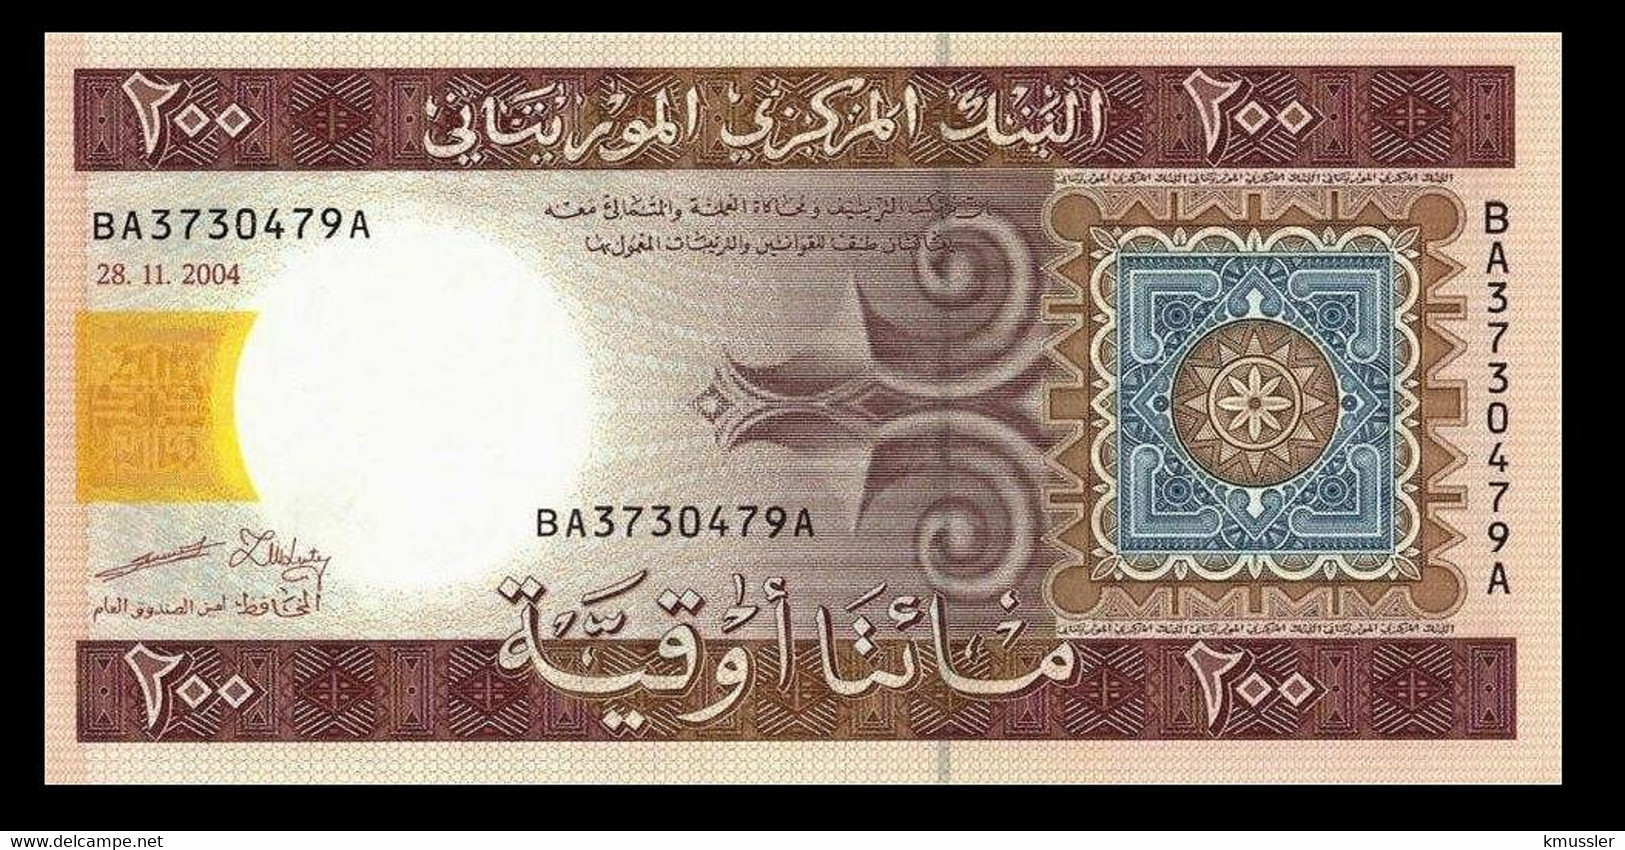 # # # Banknote Mauritanien (Mauritania) 200 Ouguiya 2004 UNC # # # - Mauritanie